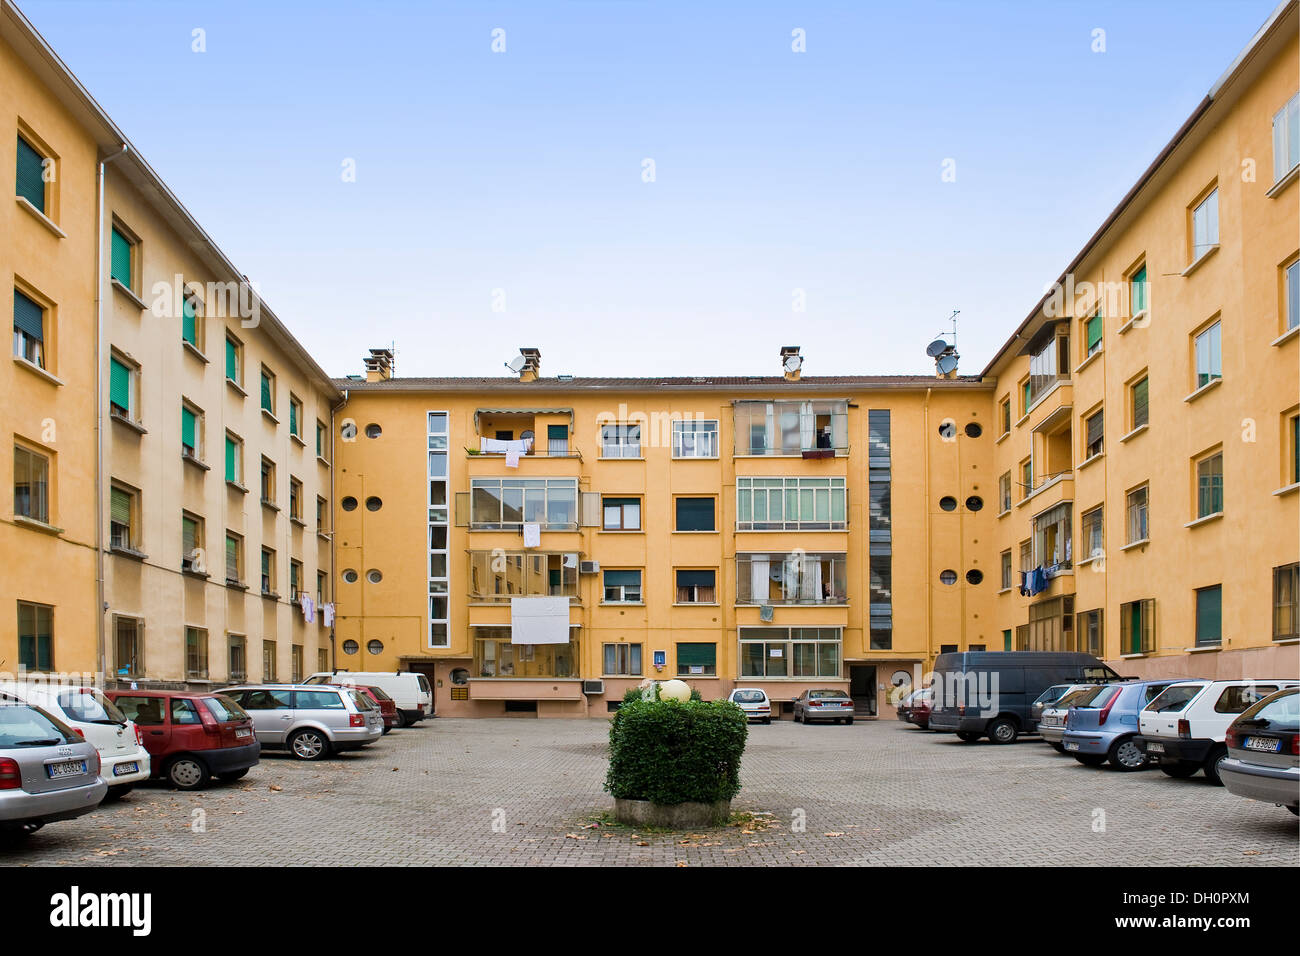 Italy, Veneto, Valdagno, Città Sociale, Social City, housing Stock Photo